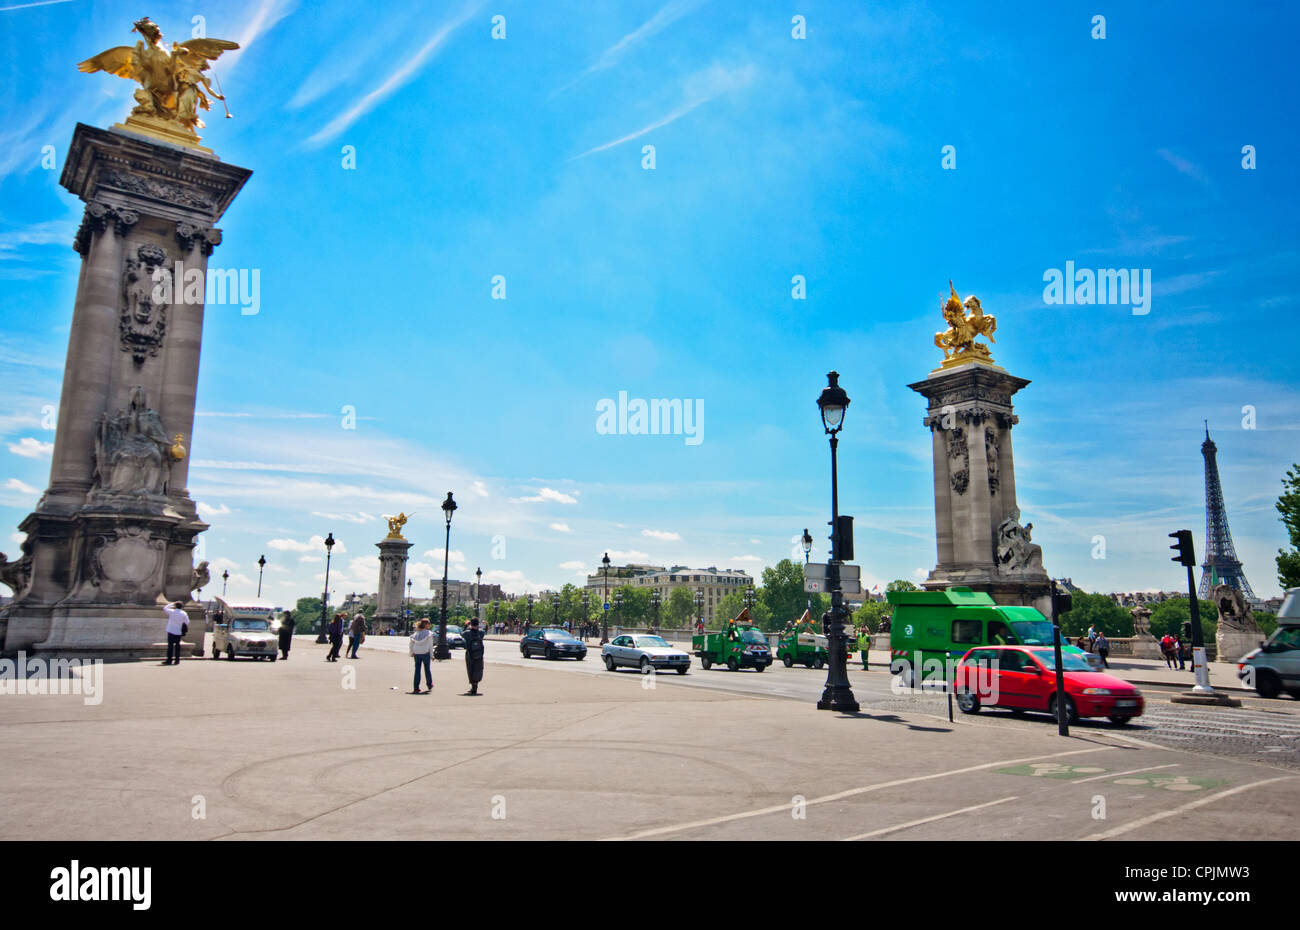 Paris, France. Pillars near pont de la concorde bridge over the Seine river. The Eiffel tower can be seen on the right. Stock Photo